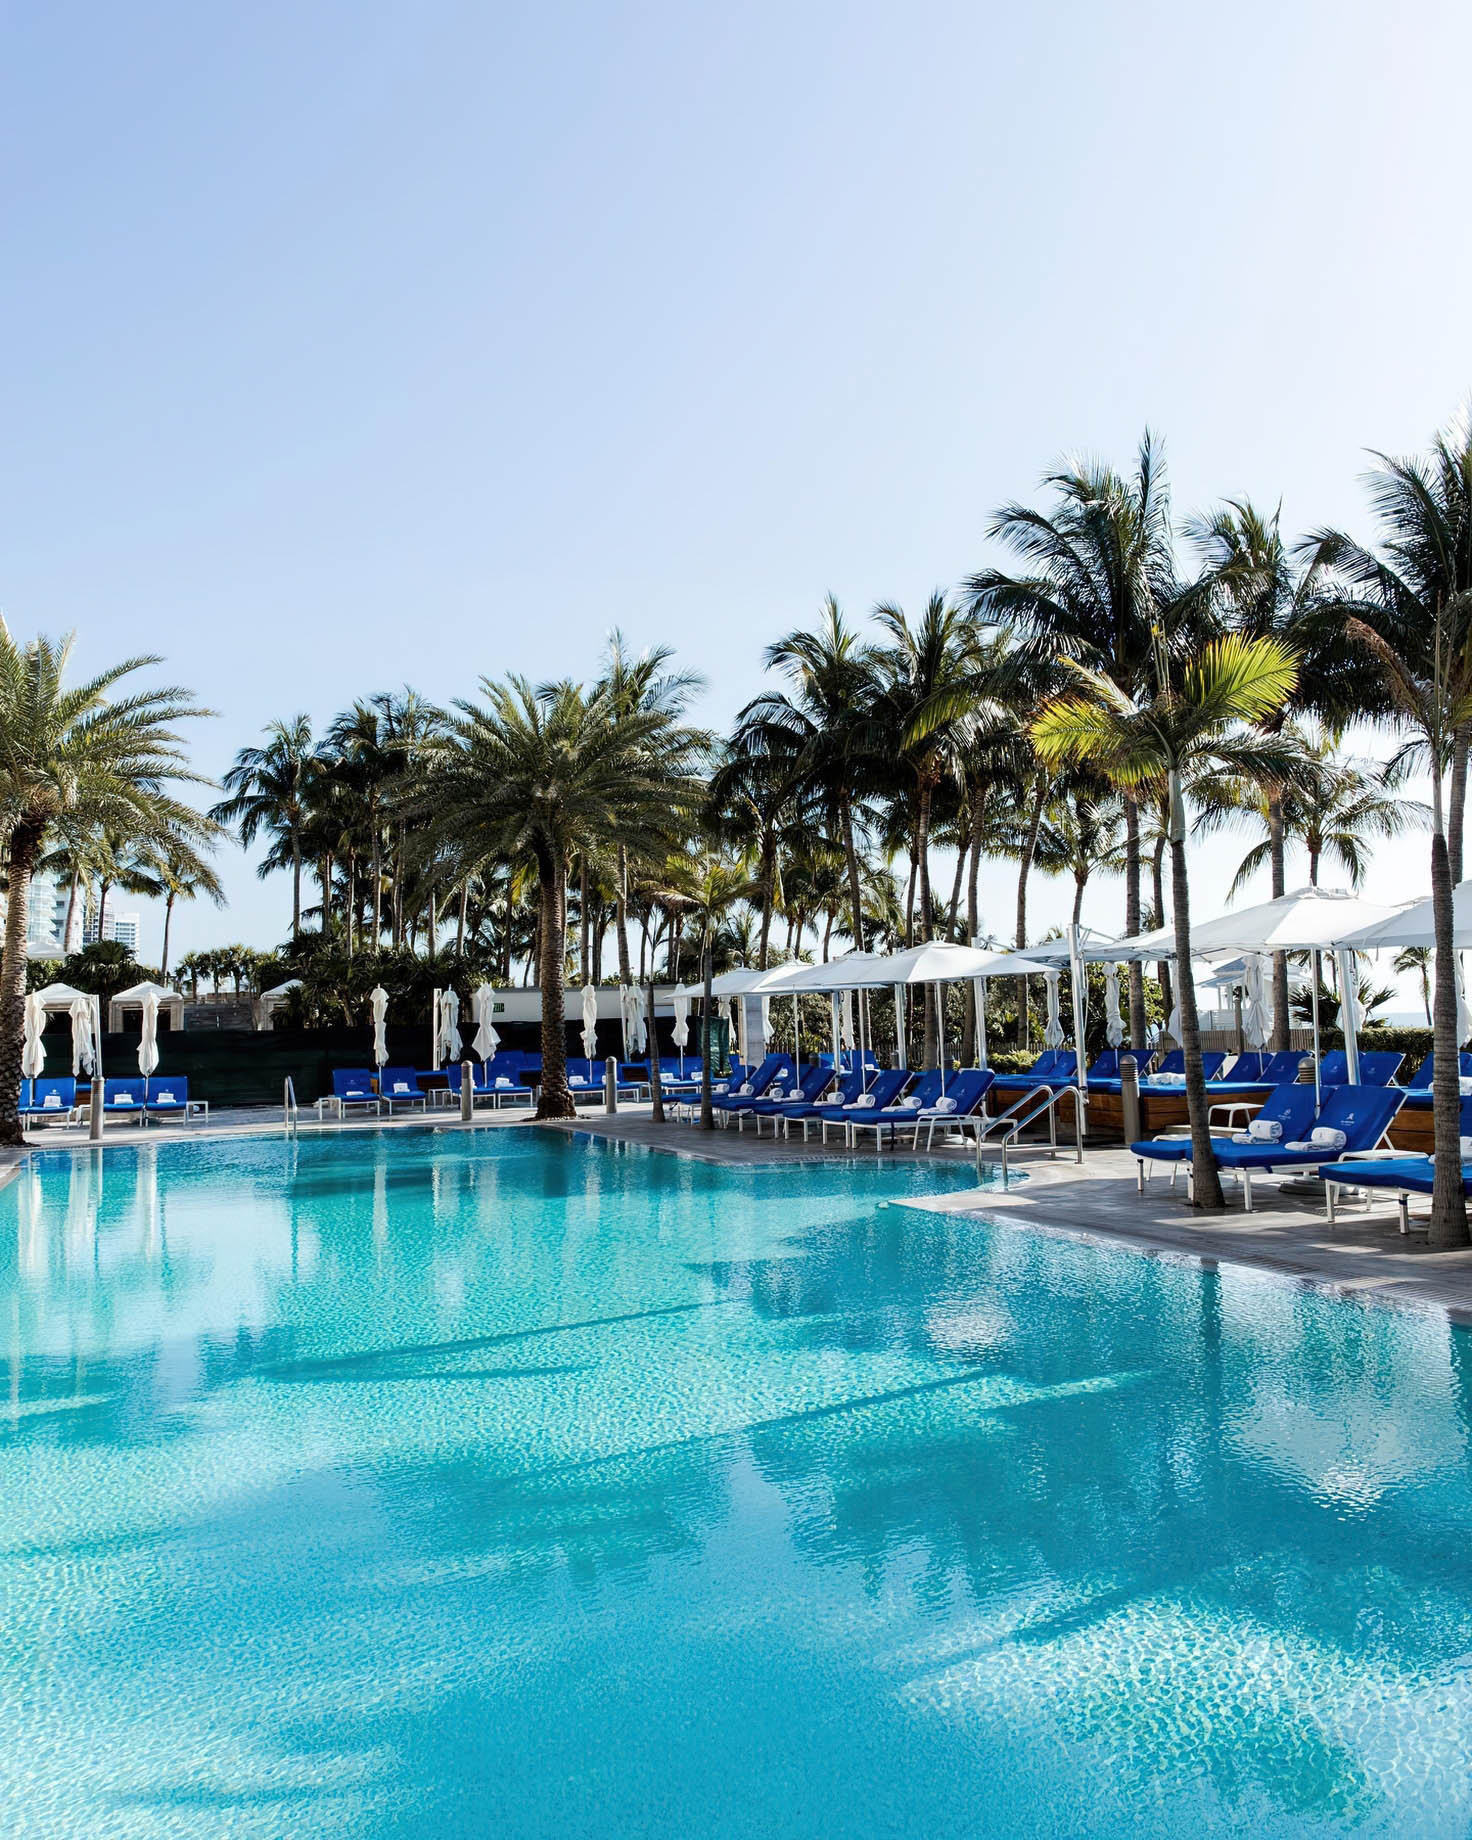 The St. Regis Bal Harbour Resort - Miami Beach, FL, USA - Pool Deck Chairs